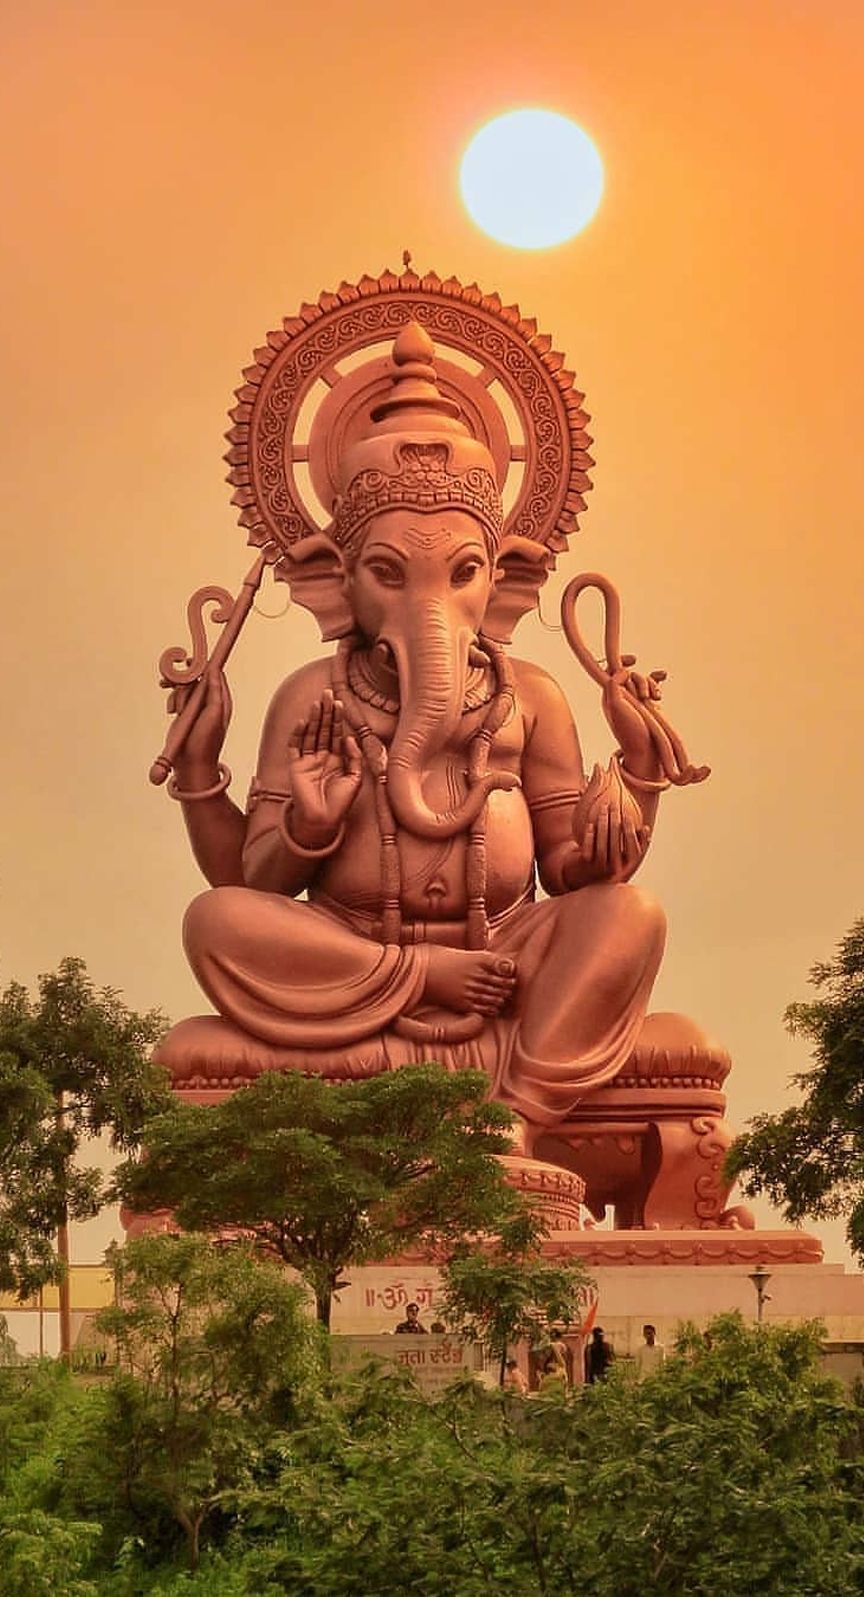 Lord Ganesha Statue, Sunset, Mobile Wallpaper, Indian God. Ganpati bappa wallpaper, Ganesha painting, Lord ganesha paintings